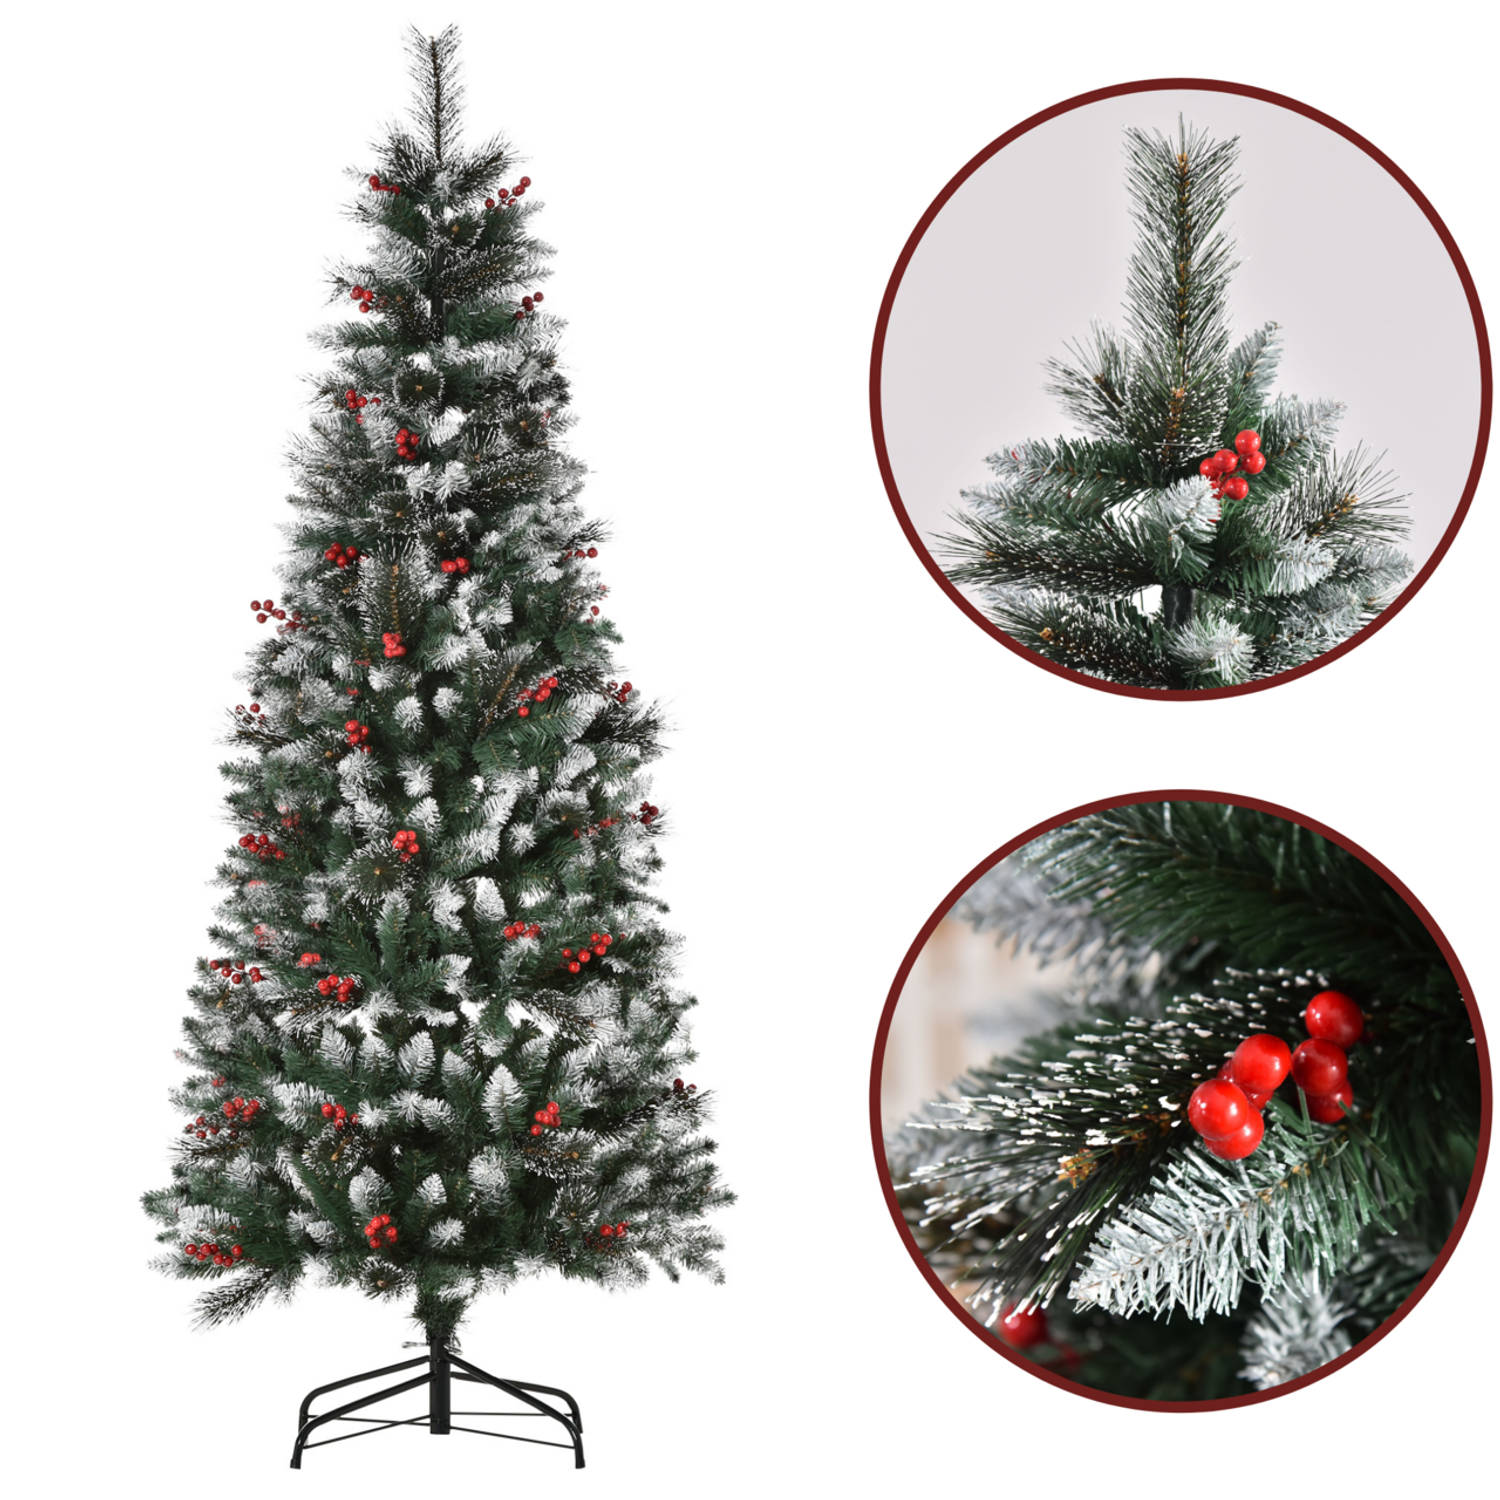 ChristmasGoodz - Kunstkerstboom - Kerstboom - Met versiering - Kunstkerstboom met sneeuw - 180 cm